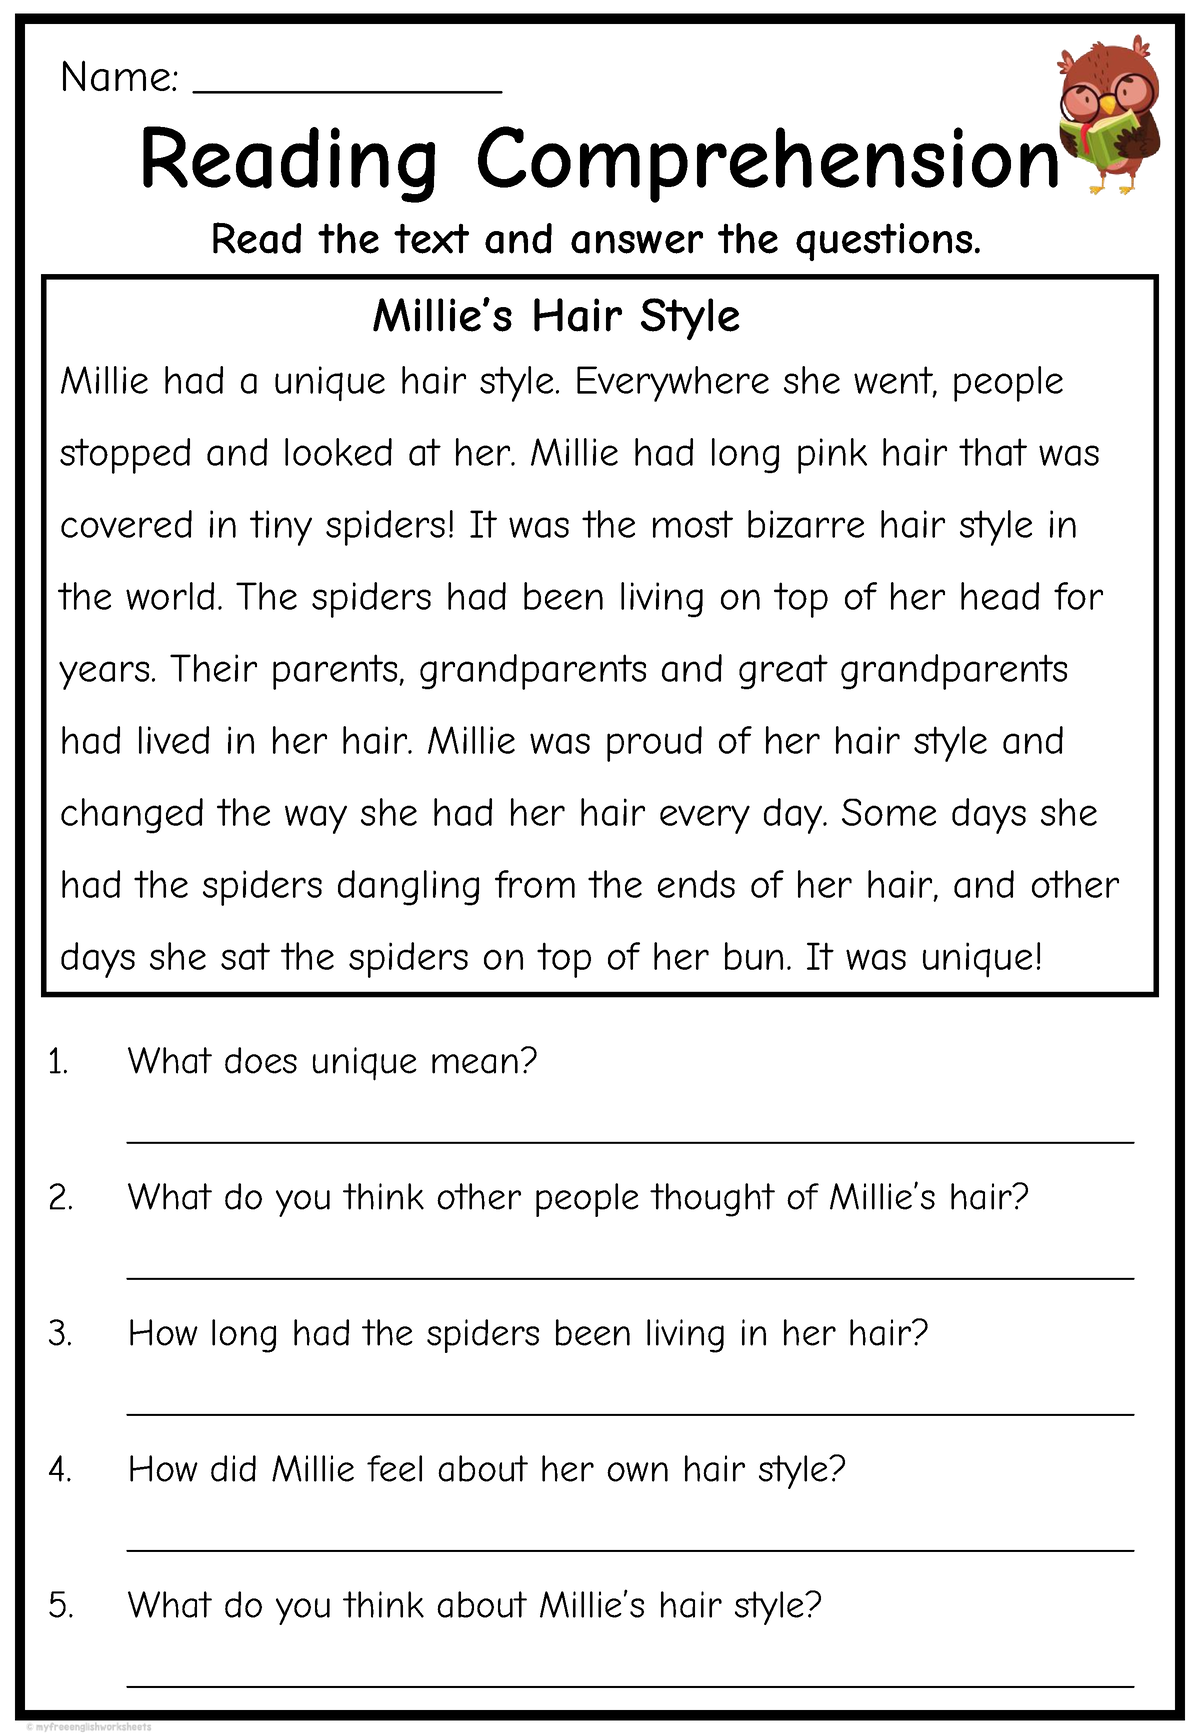 Reading Comprehension Grade 2 Milles Hair Style - Reading Comprehension Read  the text and answer the - Studocu